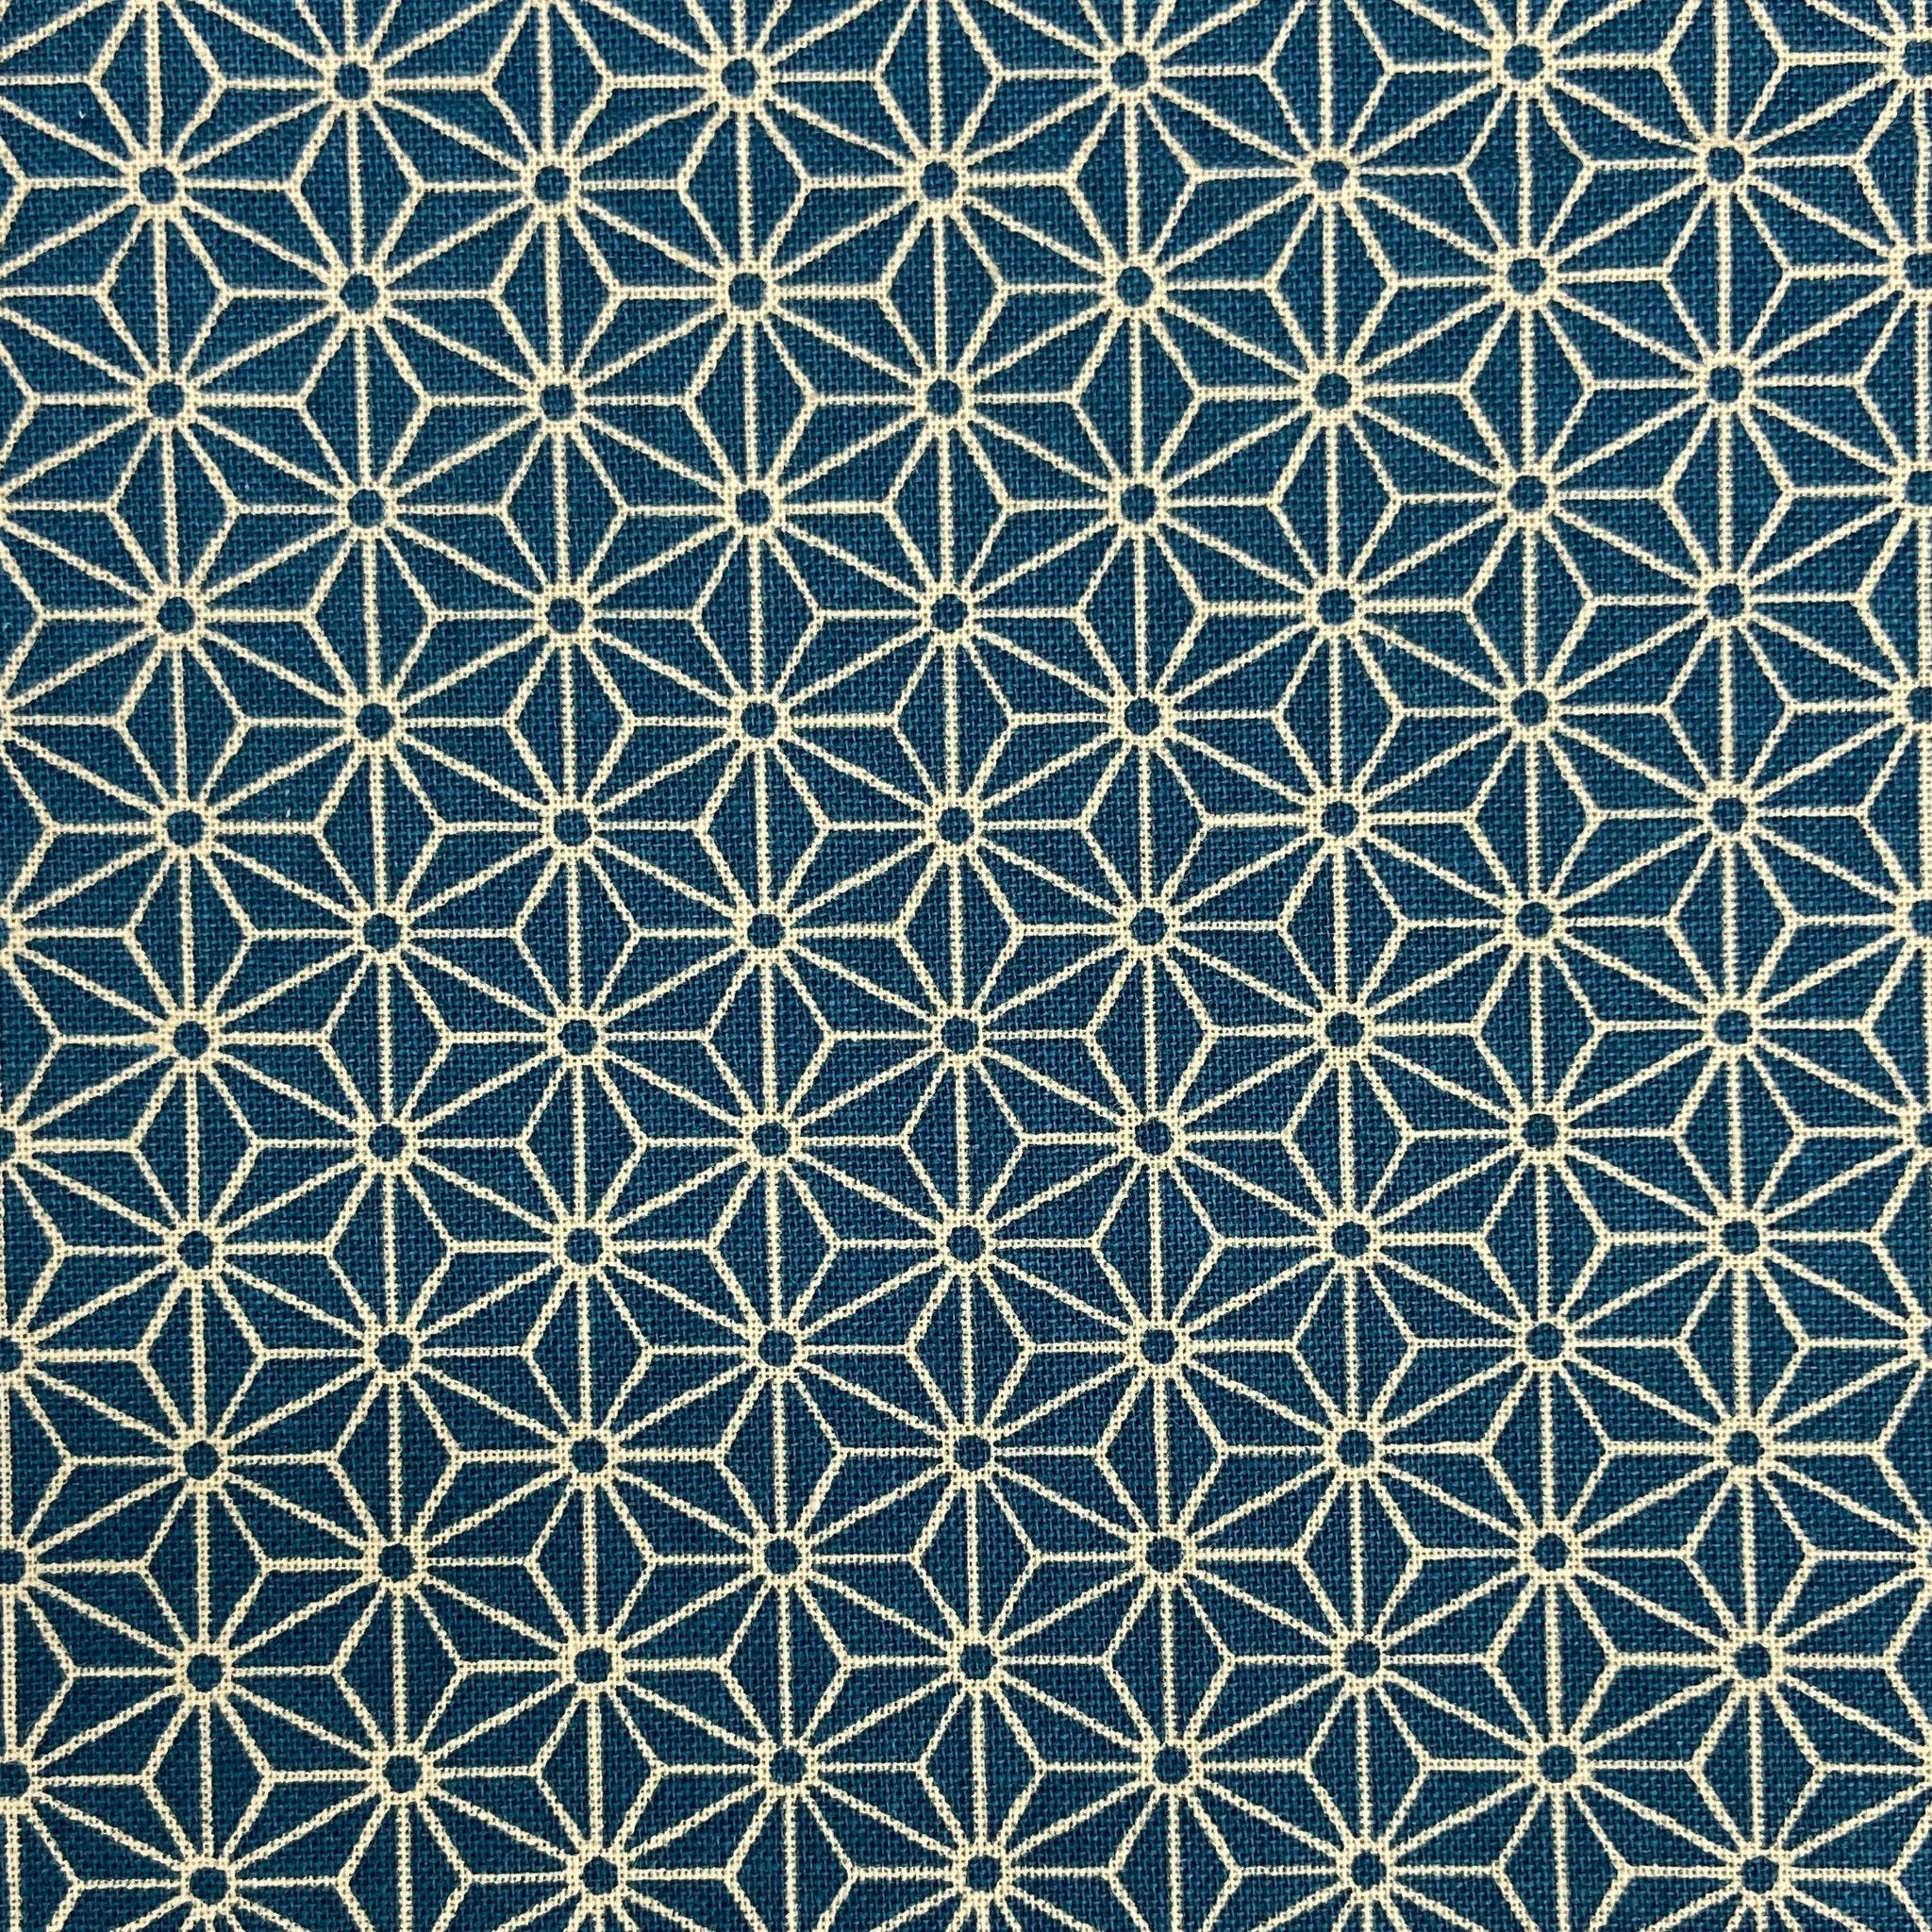 Japanese Cotton Sheeting Print - Hemp Leaves Blue